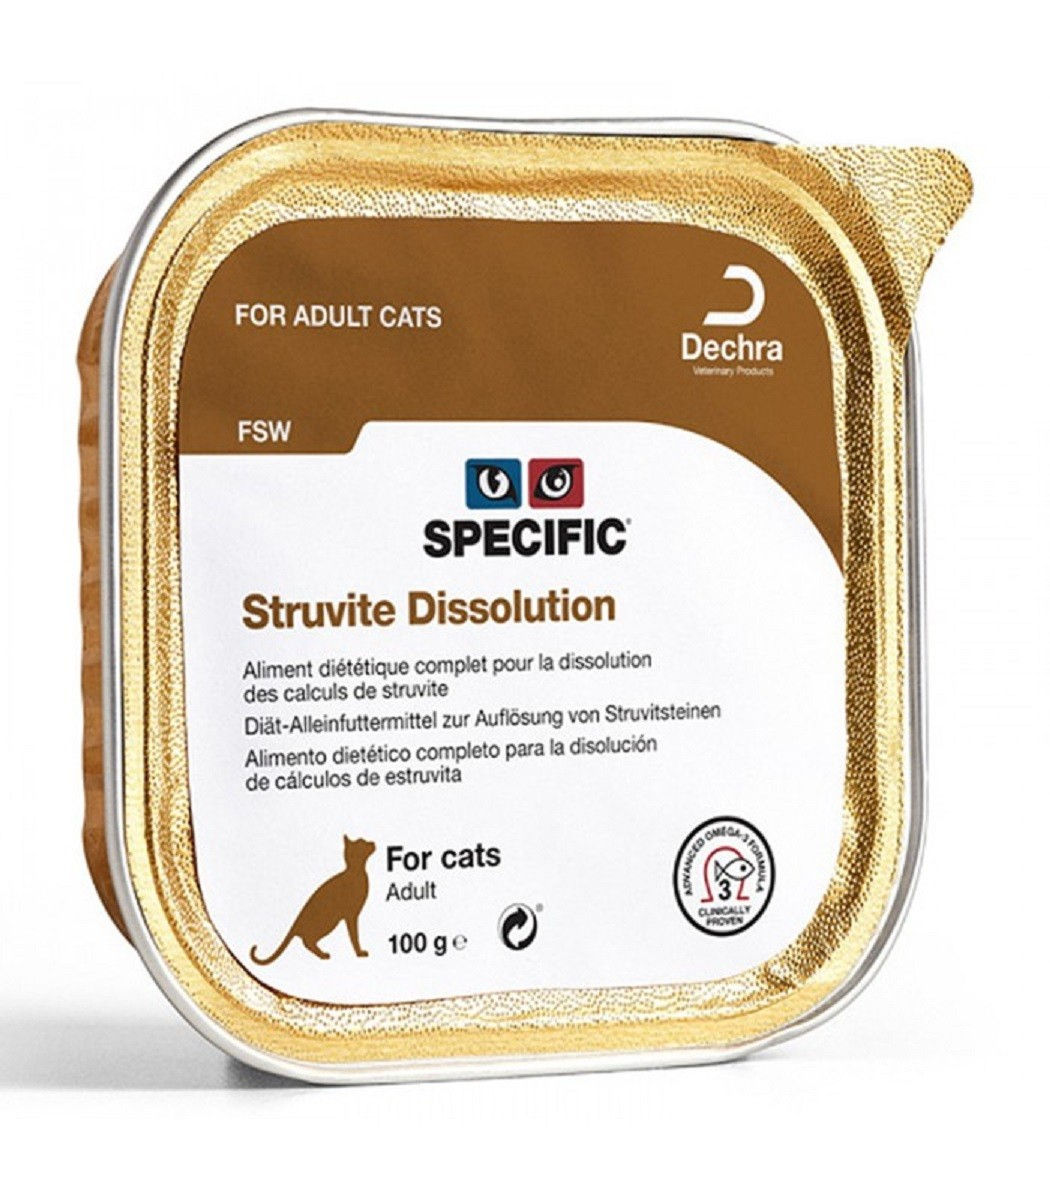 Pack de 7 tarrinas SPECIFIC FSW Struvite Dissolution para gatos adultos